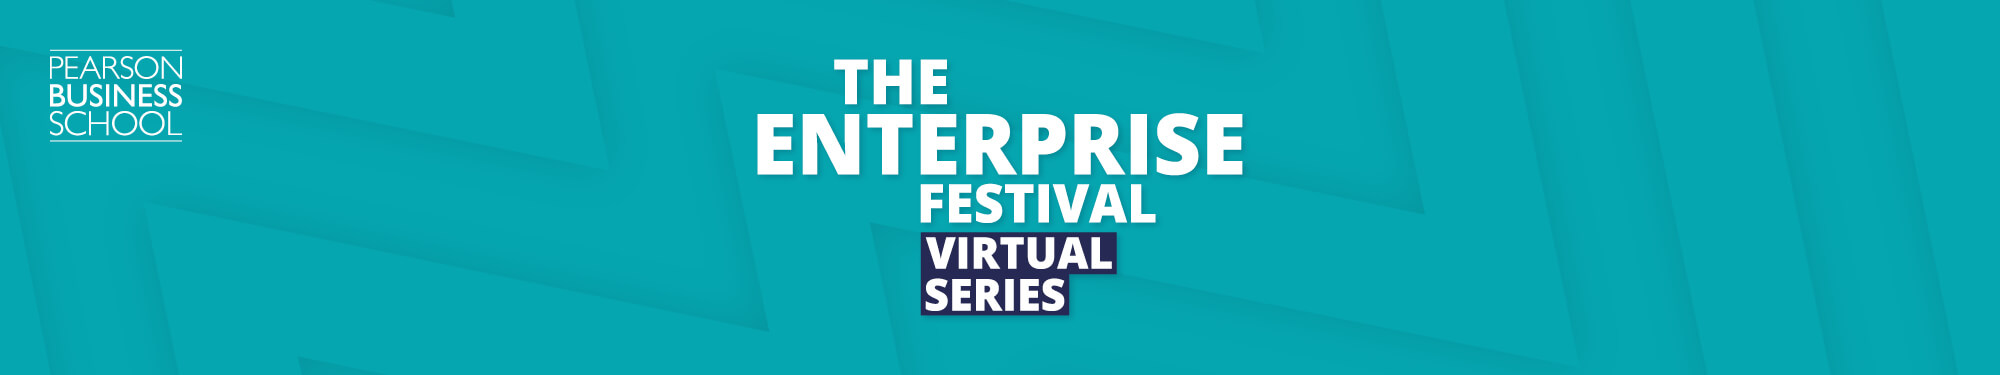 The enterprise festival virtual series header